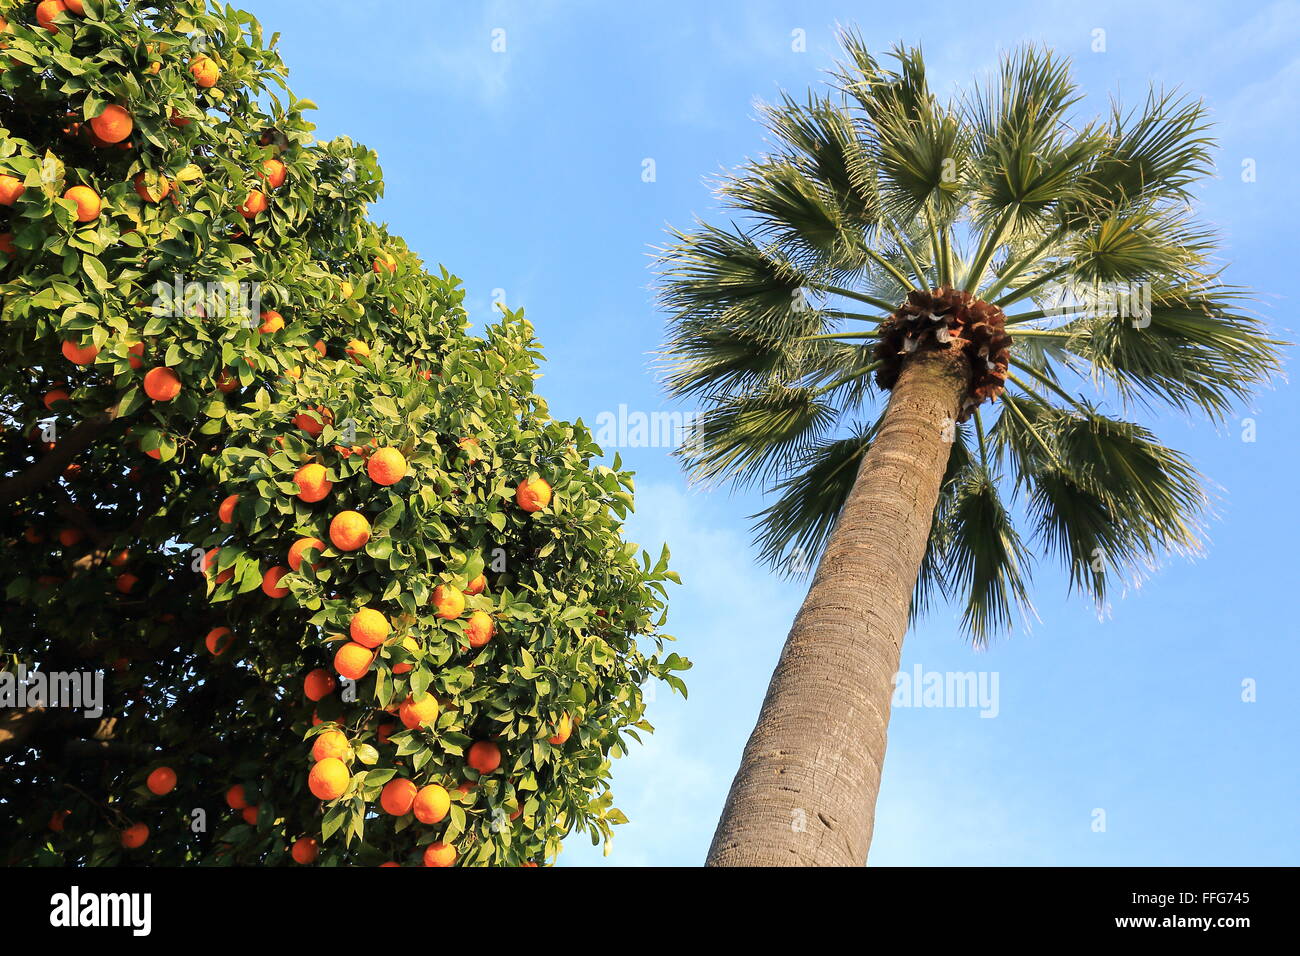 Palm tree and orange tree in the gardens of Alcazar de los Reyes Cristianos, Cordoba, Spain Stock Photo